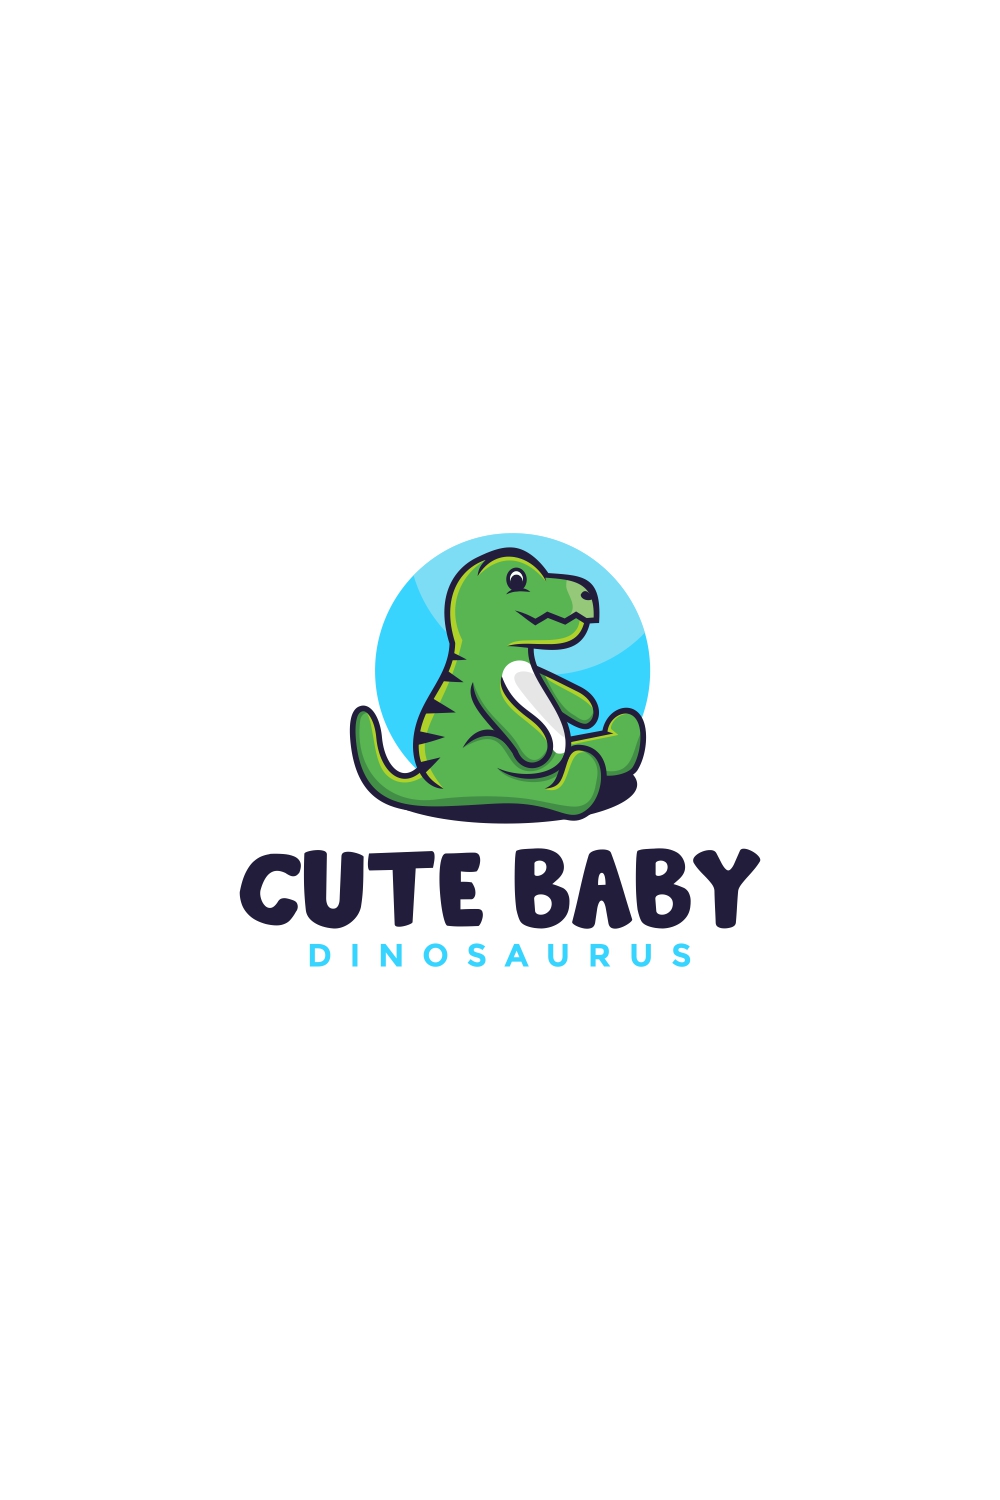 Dinosaur cute logo design pinterest preview image.